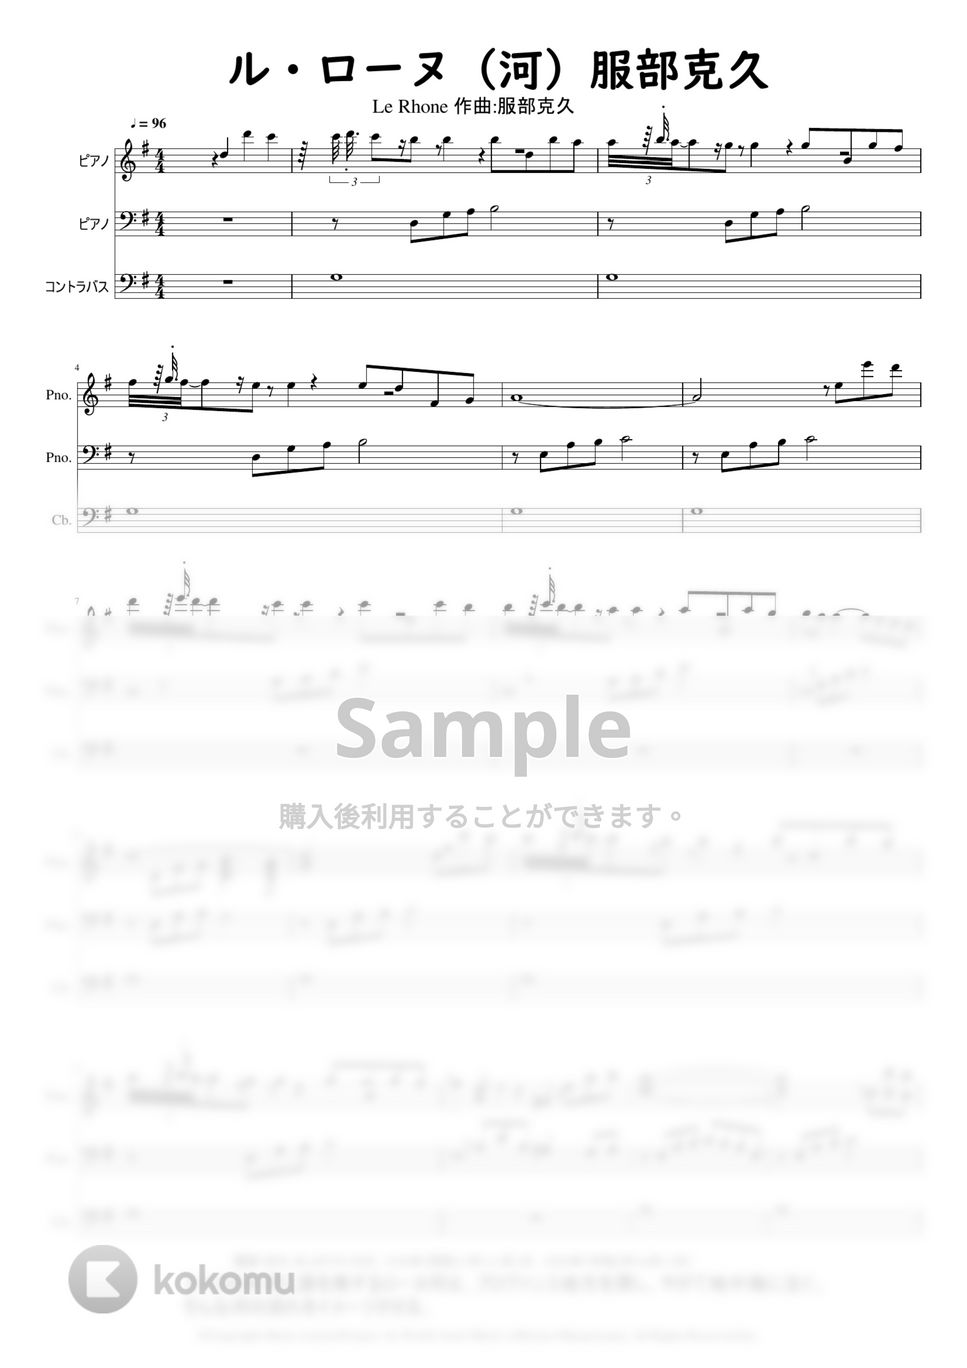 作曲者：服部克久 - ル・ローヌ(河) RHONE-LE 楽譜 (作曲者：服部克久) by Mitsuru Minamiyama